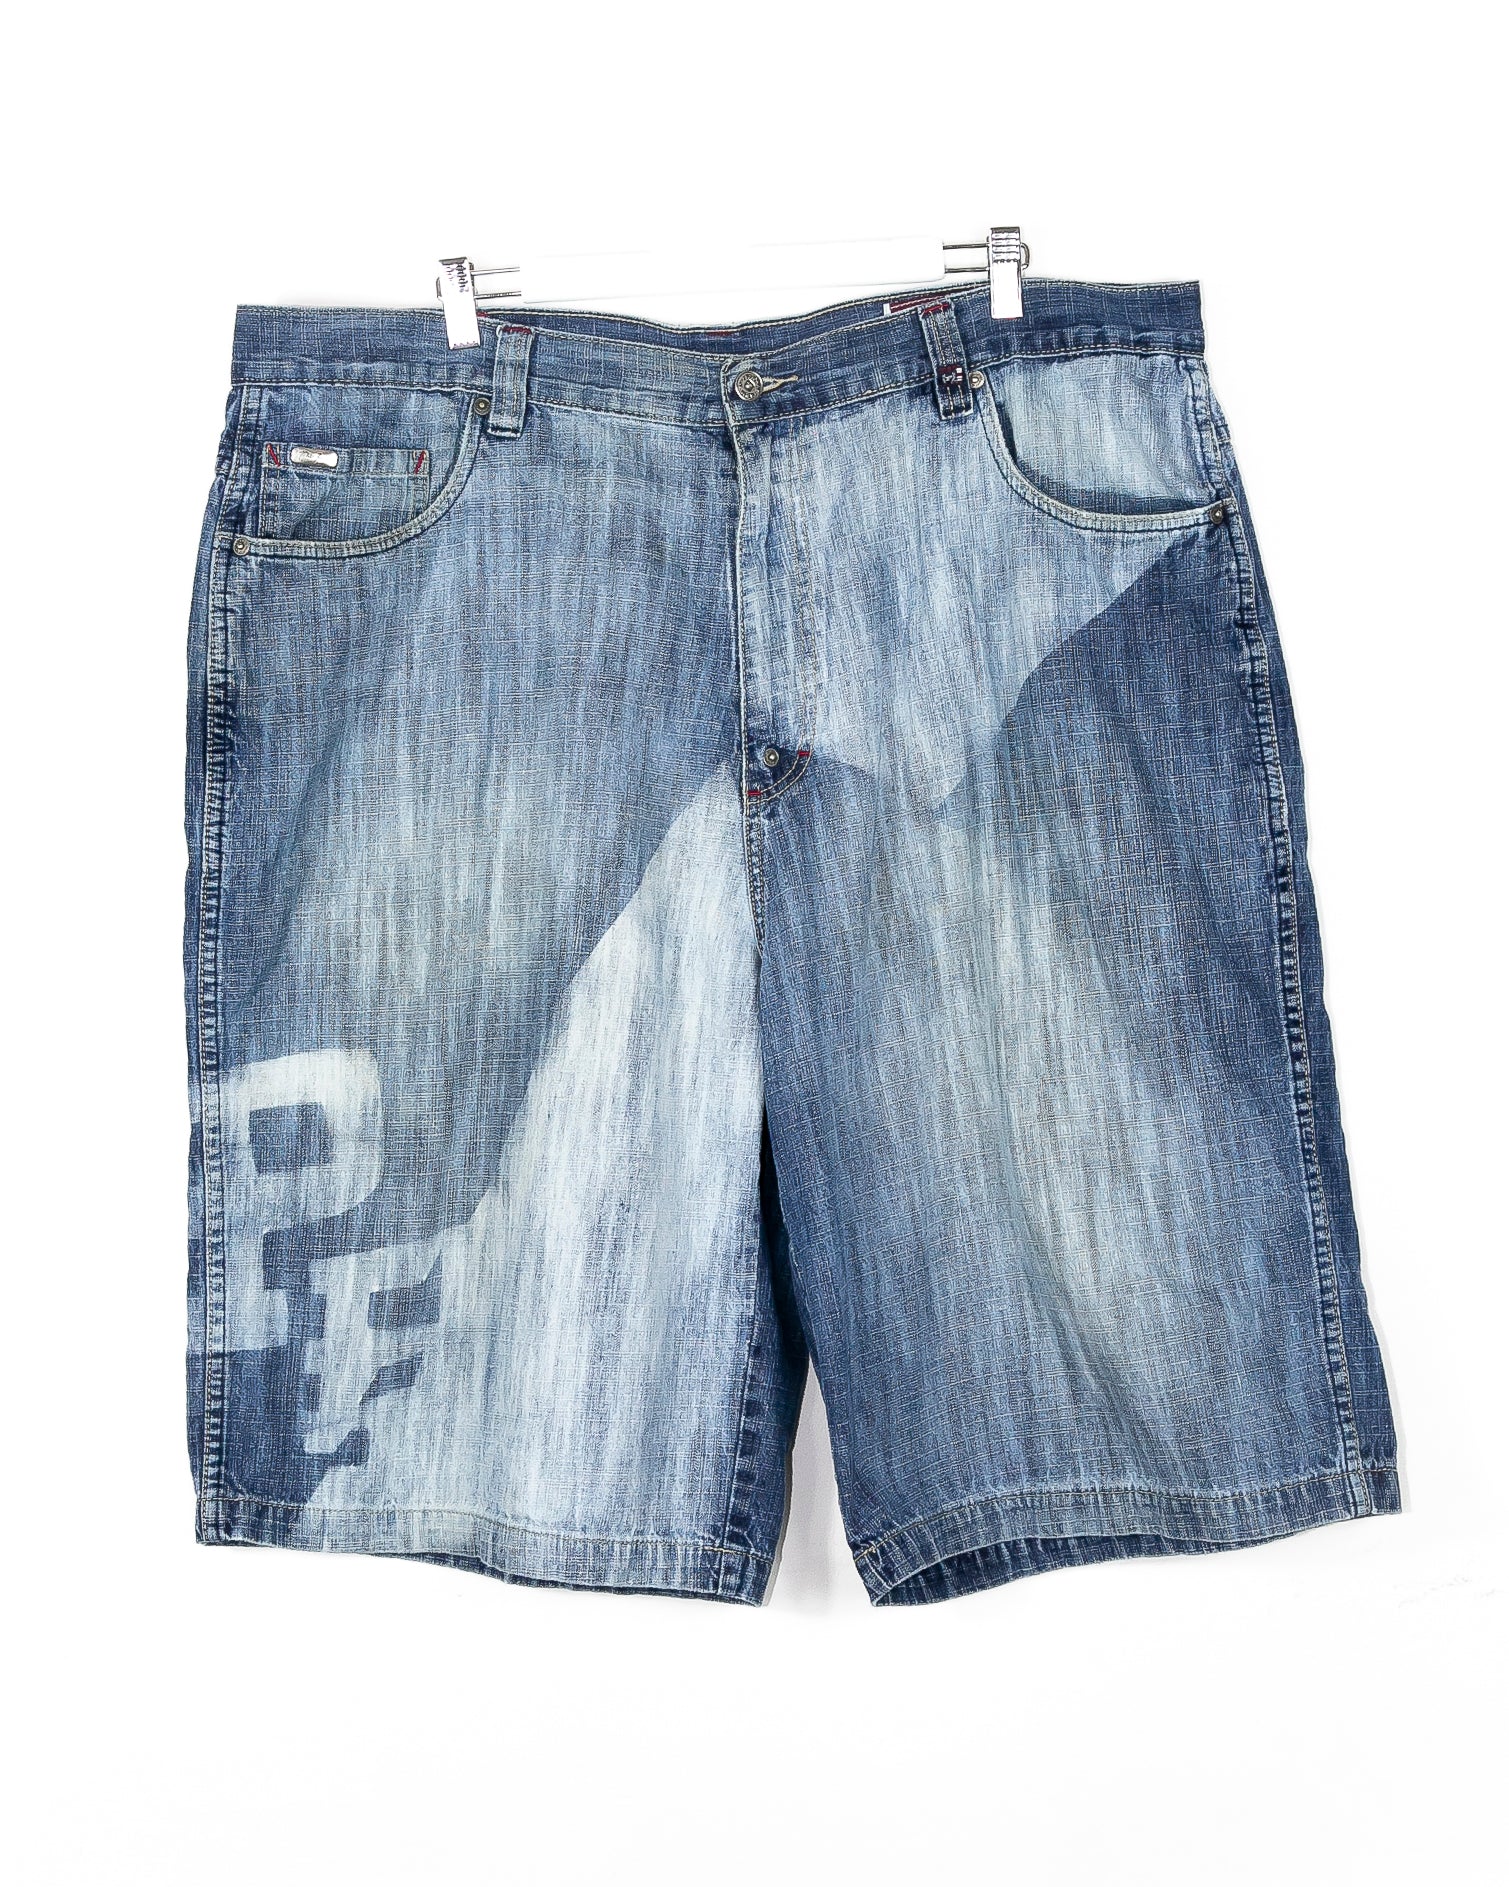 carol bumstead add photo phat farm jean shorts